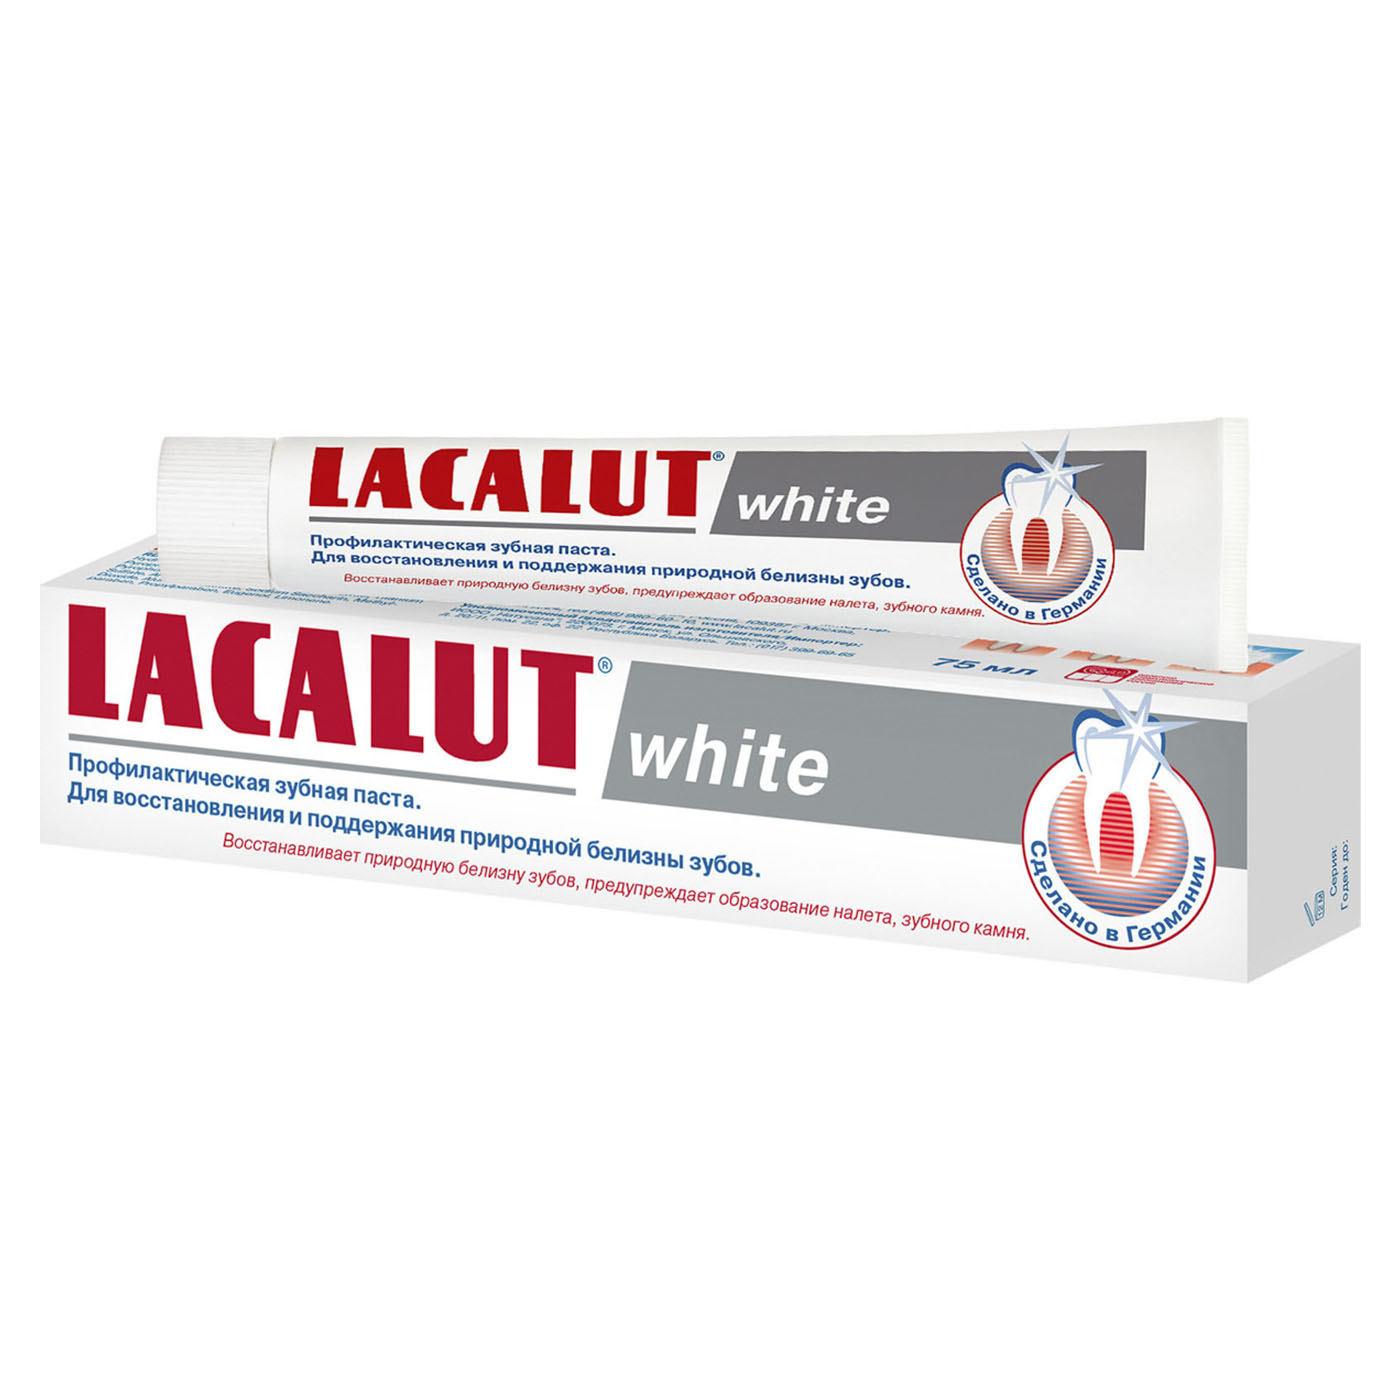 Lacalut Зубная паста Уайт 75 мл (Lacalut, Зубные пасты) lacalut набор зубная паста актив 75 мл 2 штуки lacalut зубные пасты